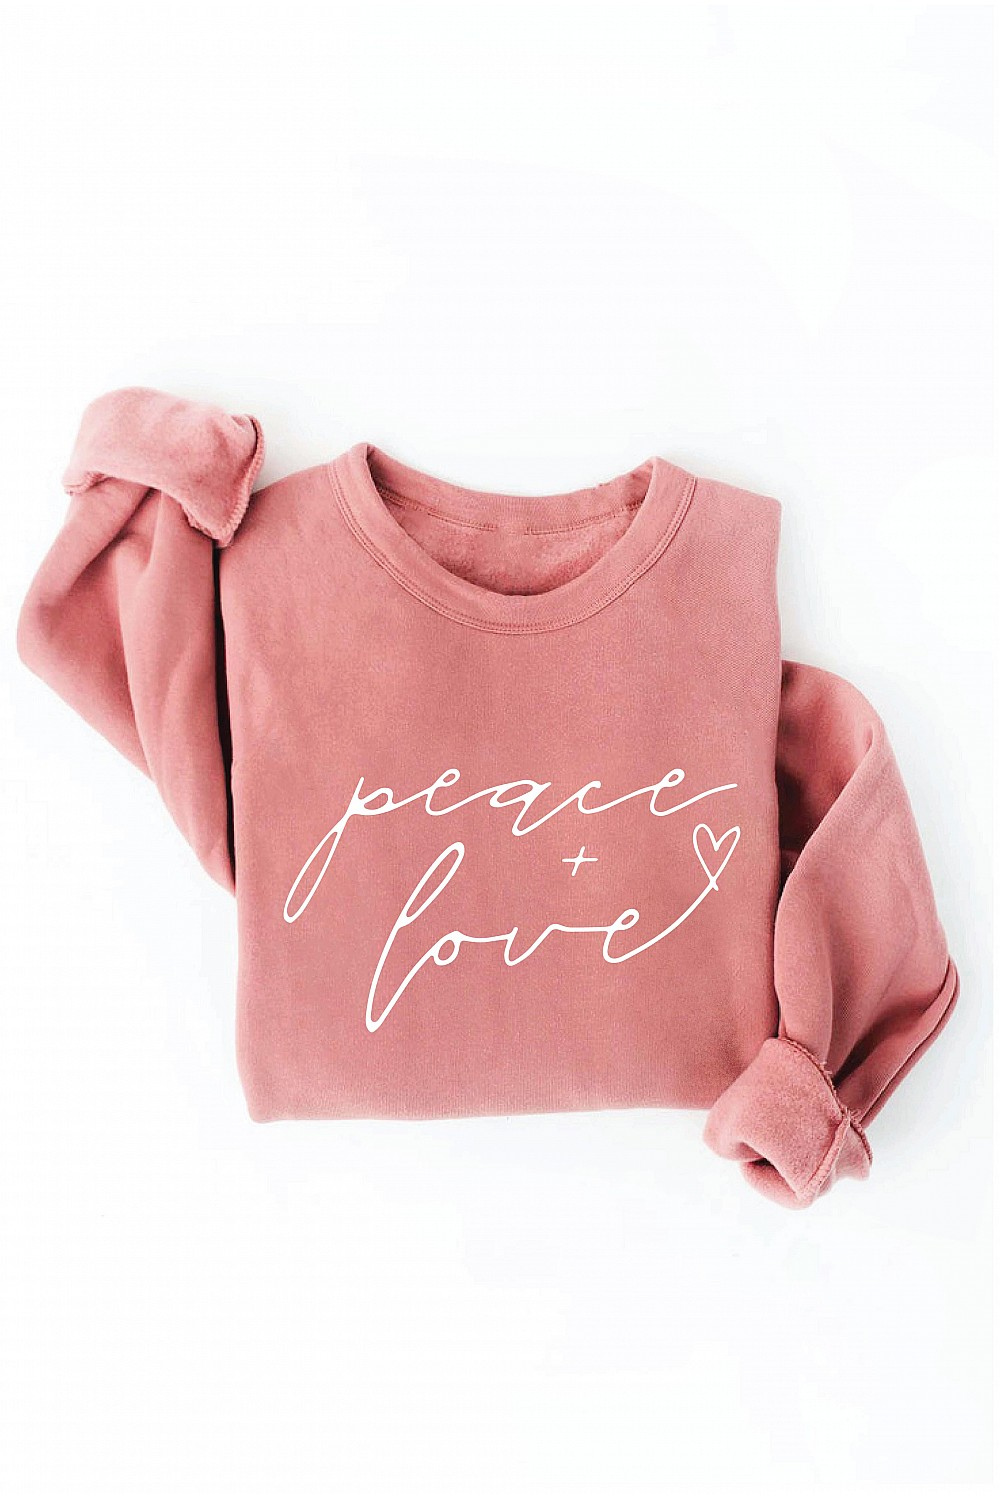 Peace and Love Sweatshirt - Mauve